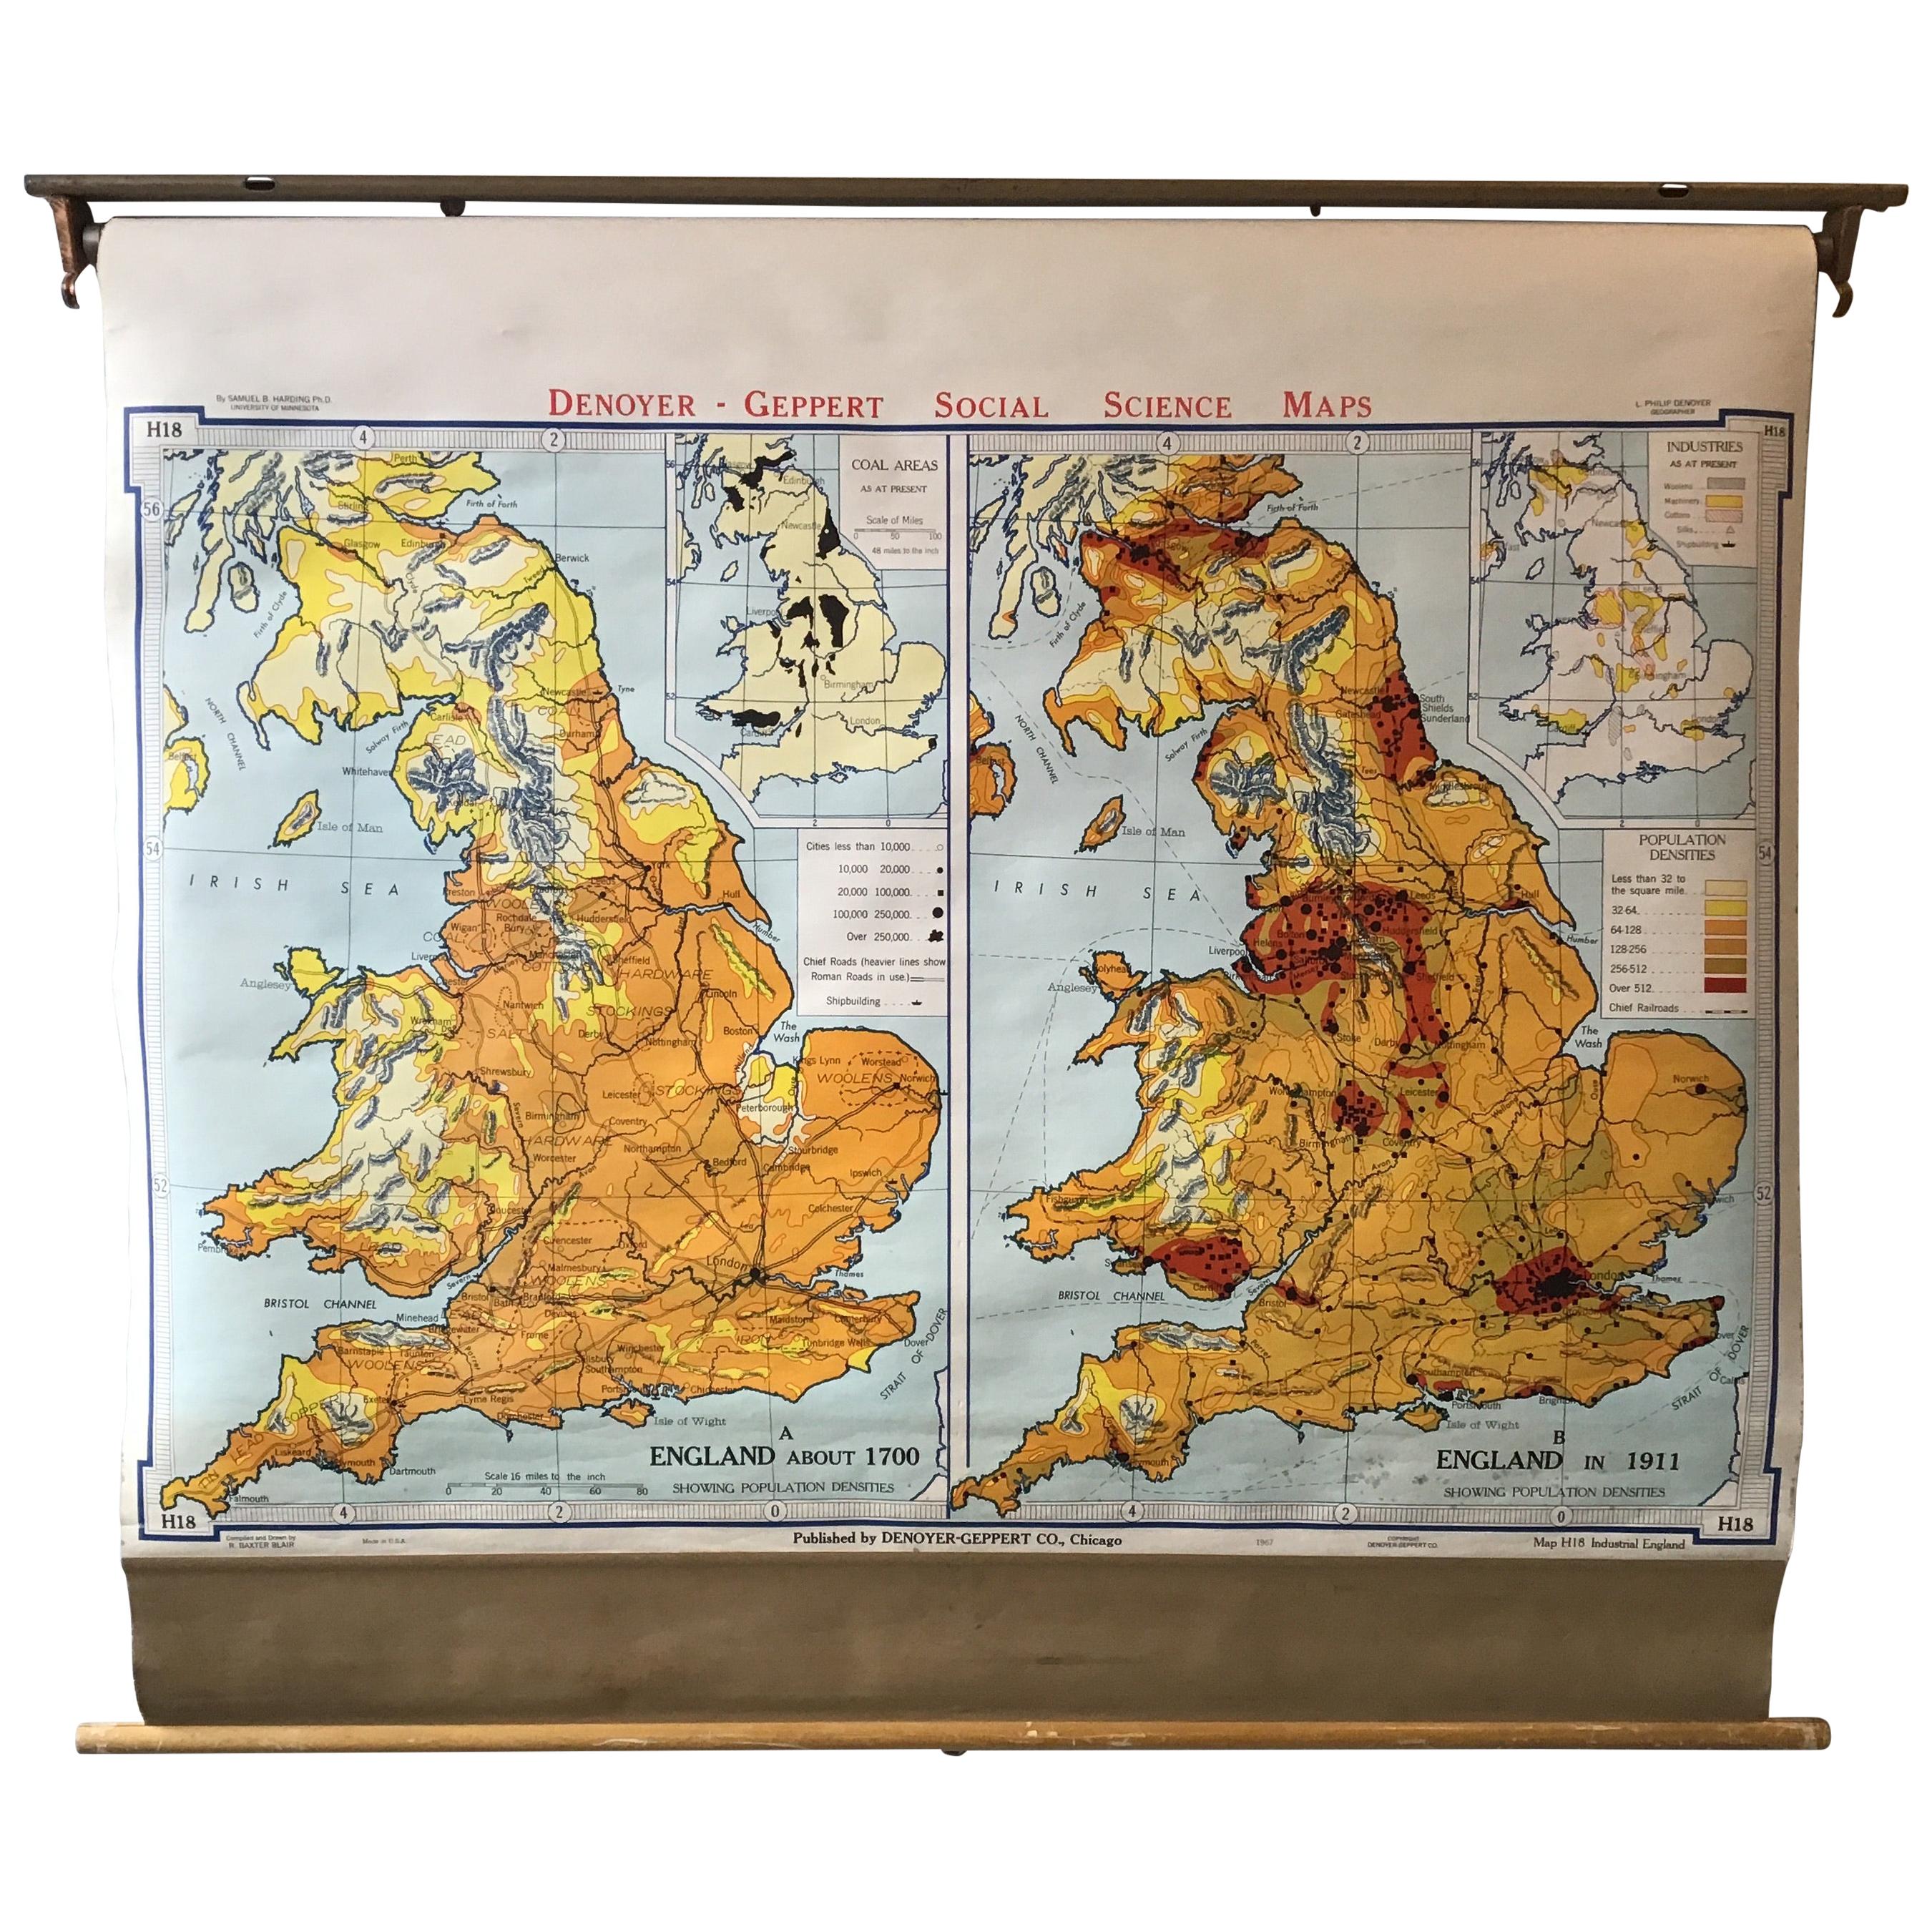 1967 School Map of England